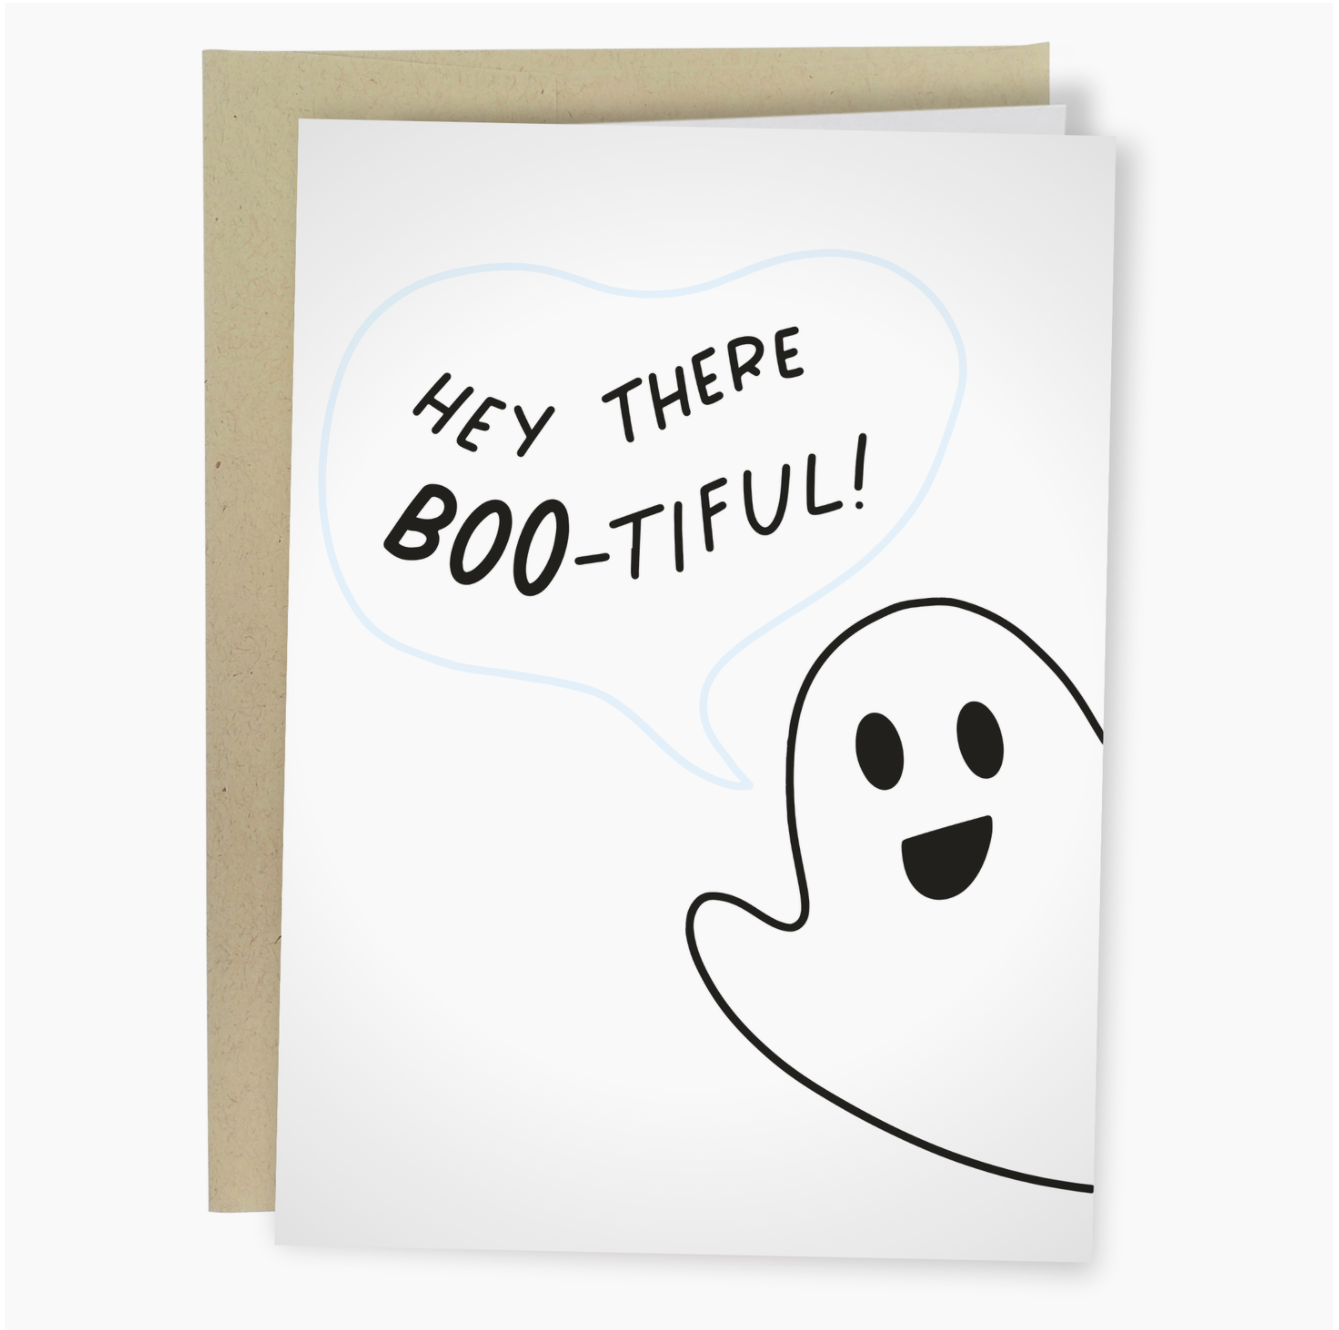 Hey There Boo-tiful!